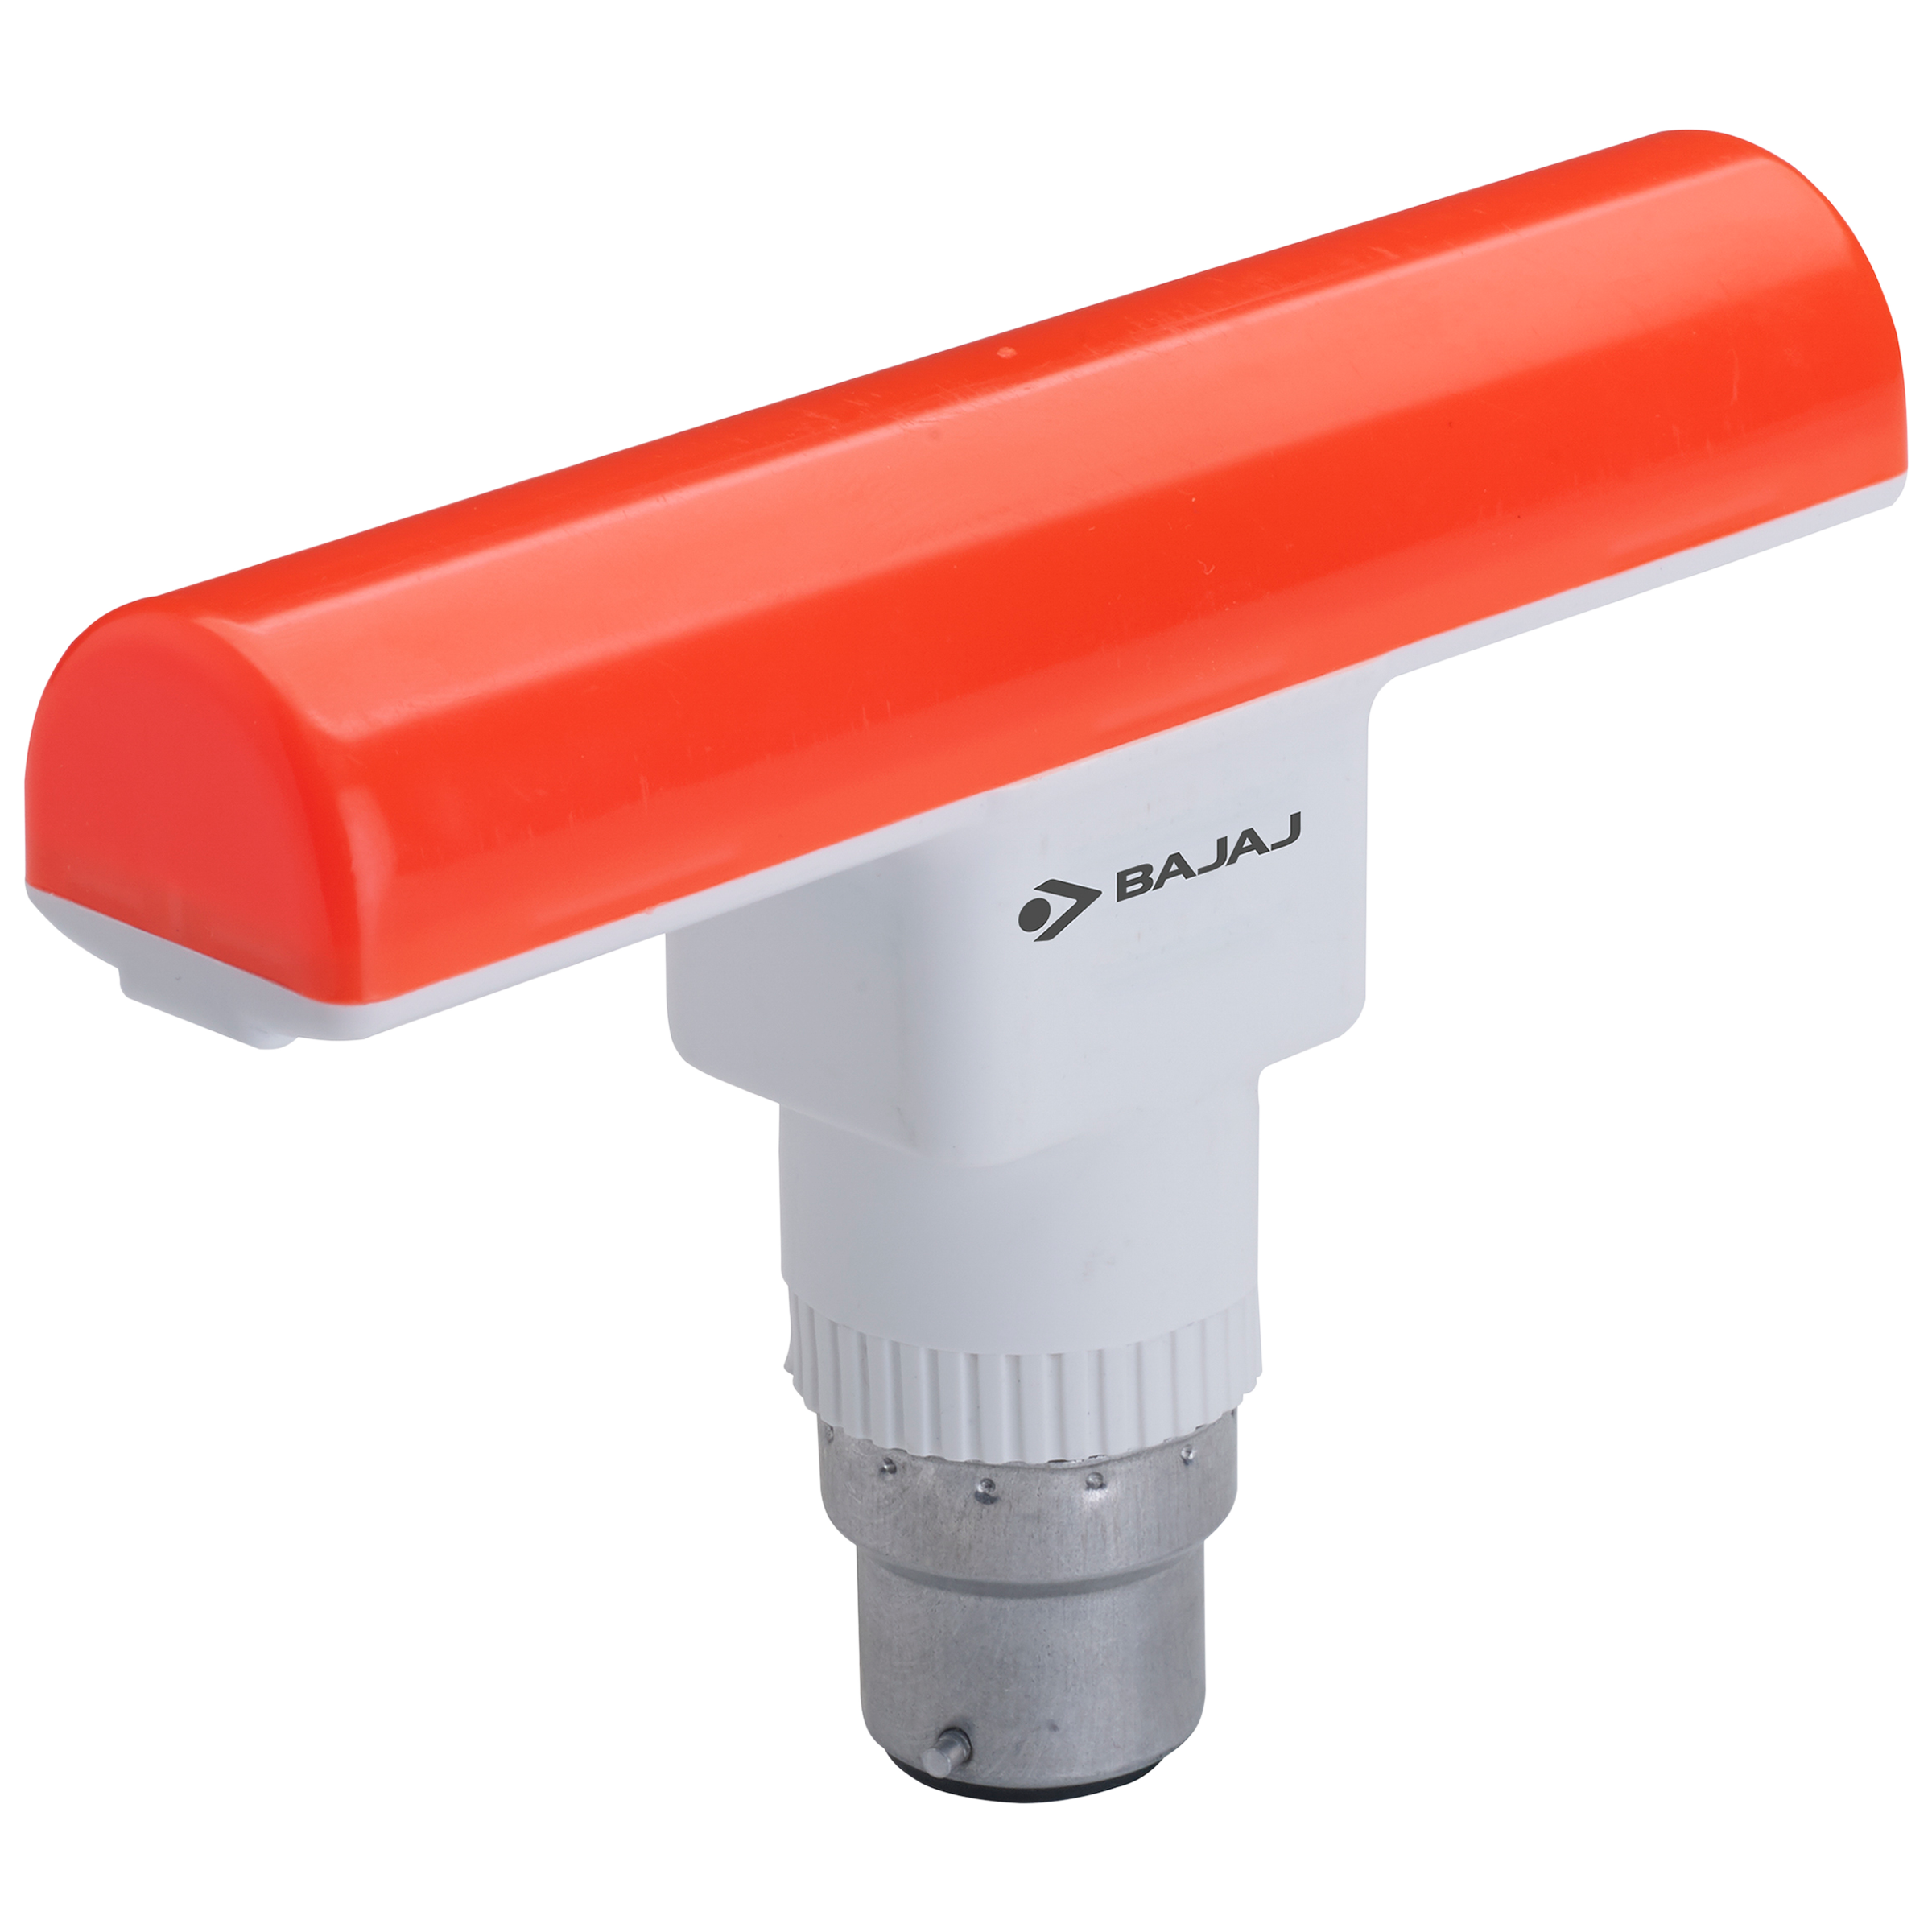 Bajaj Ivora Linear Deco 5 Watts Electric Powered LED Bulb (830400, Red & White)_1